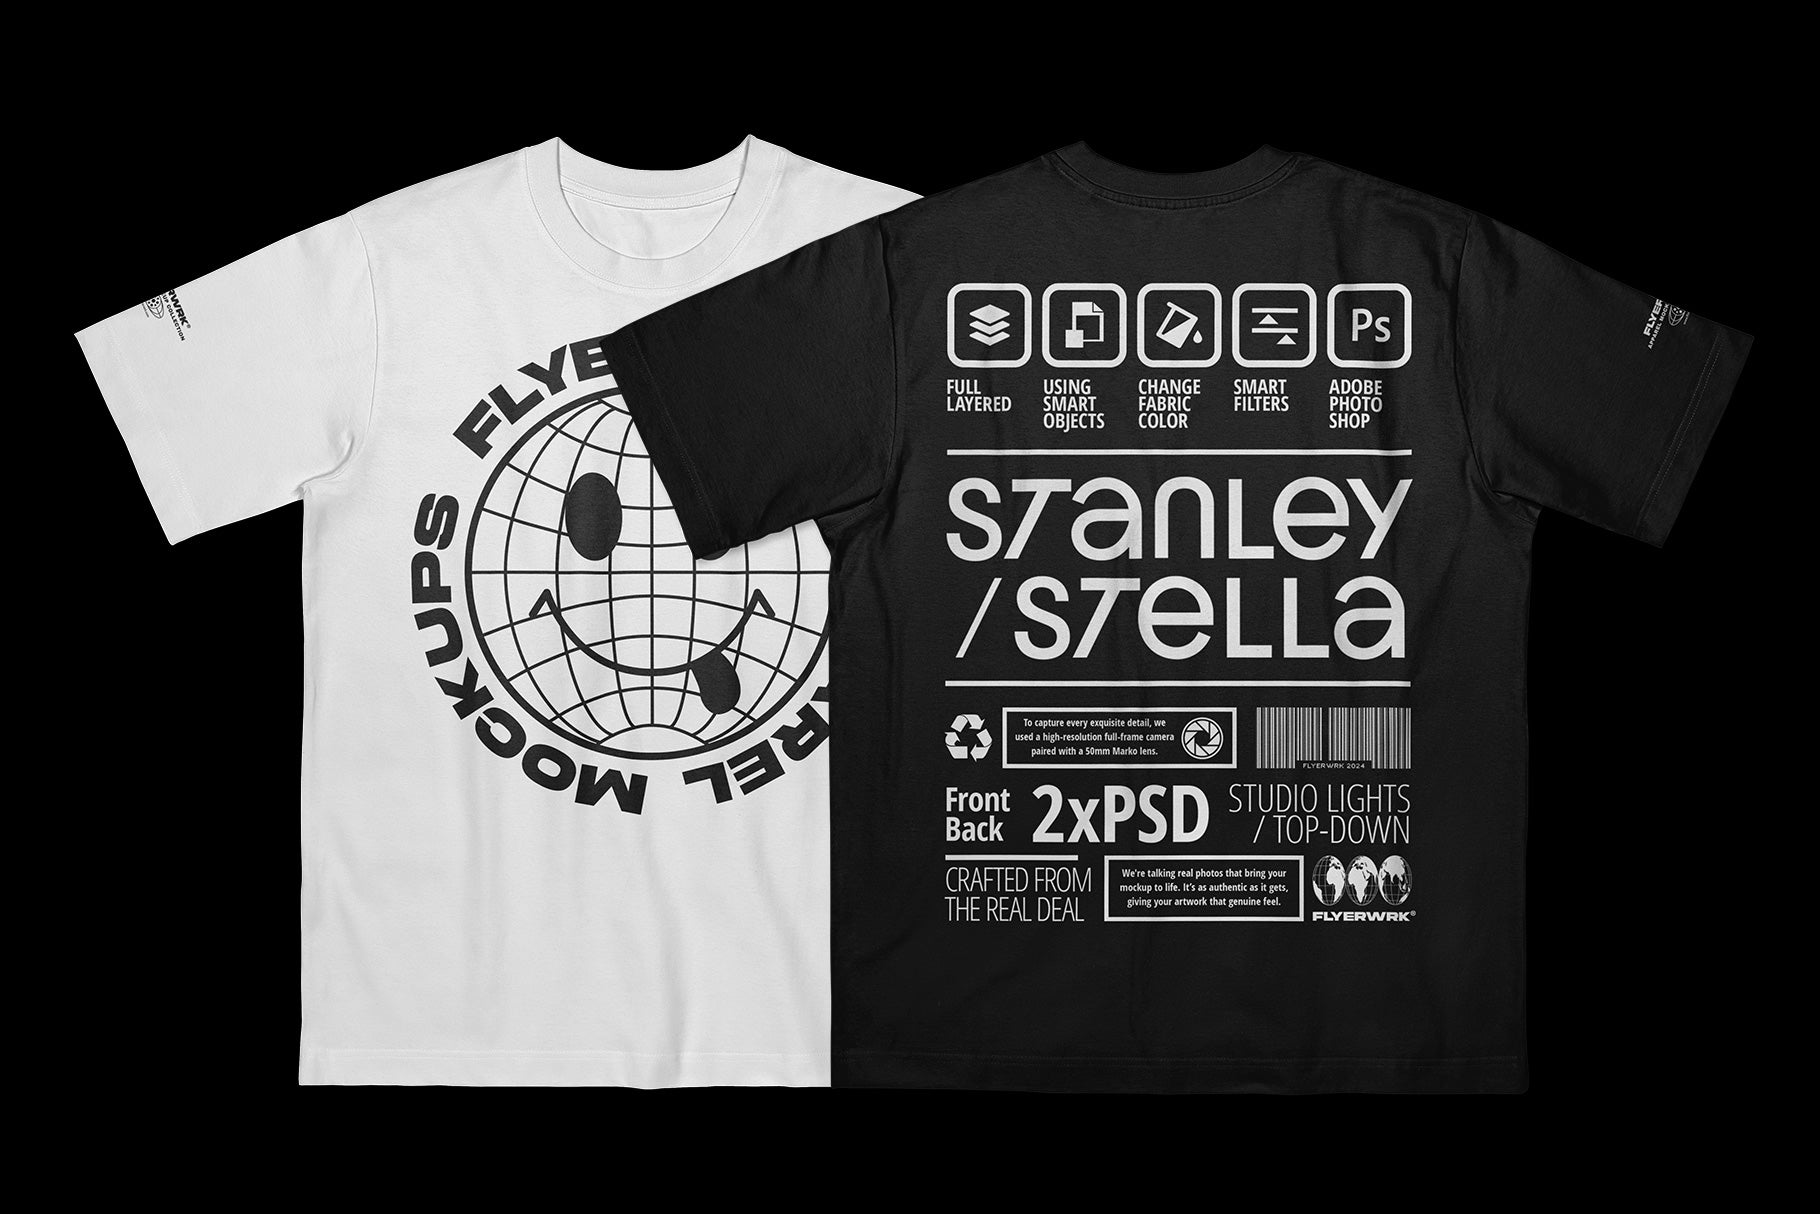 Stanley Stella T-shirt Mockup - Flat lay